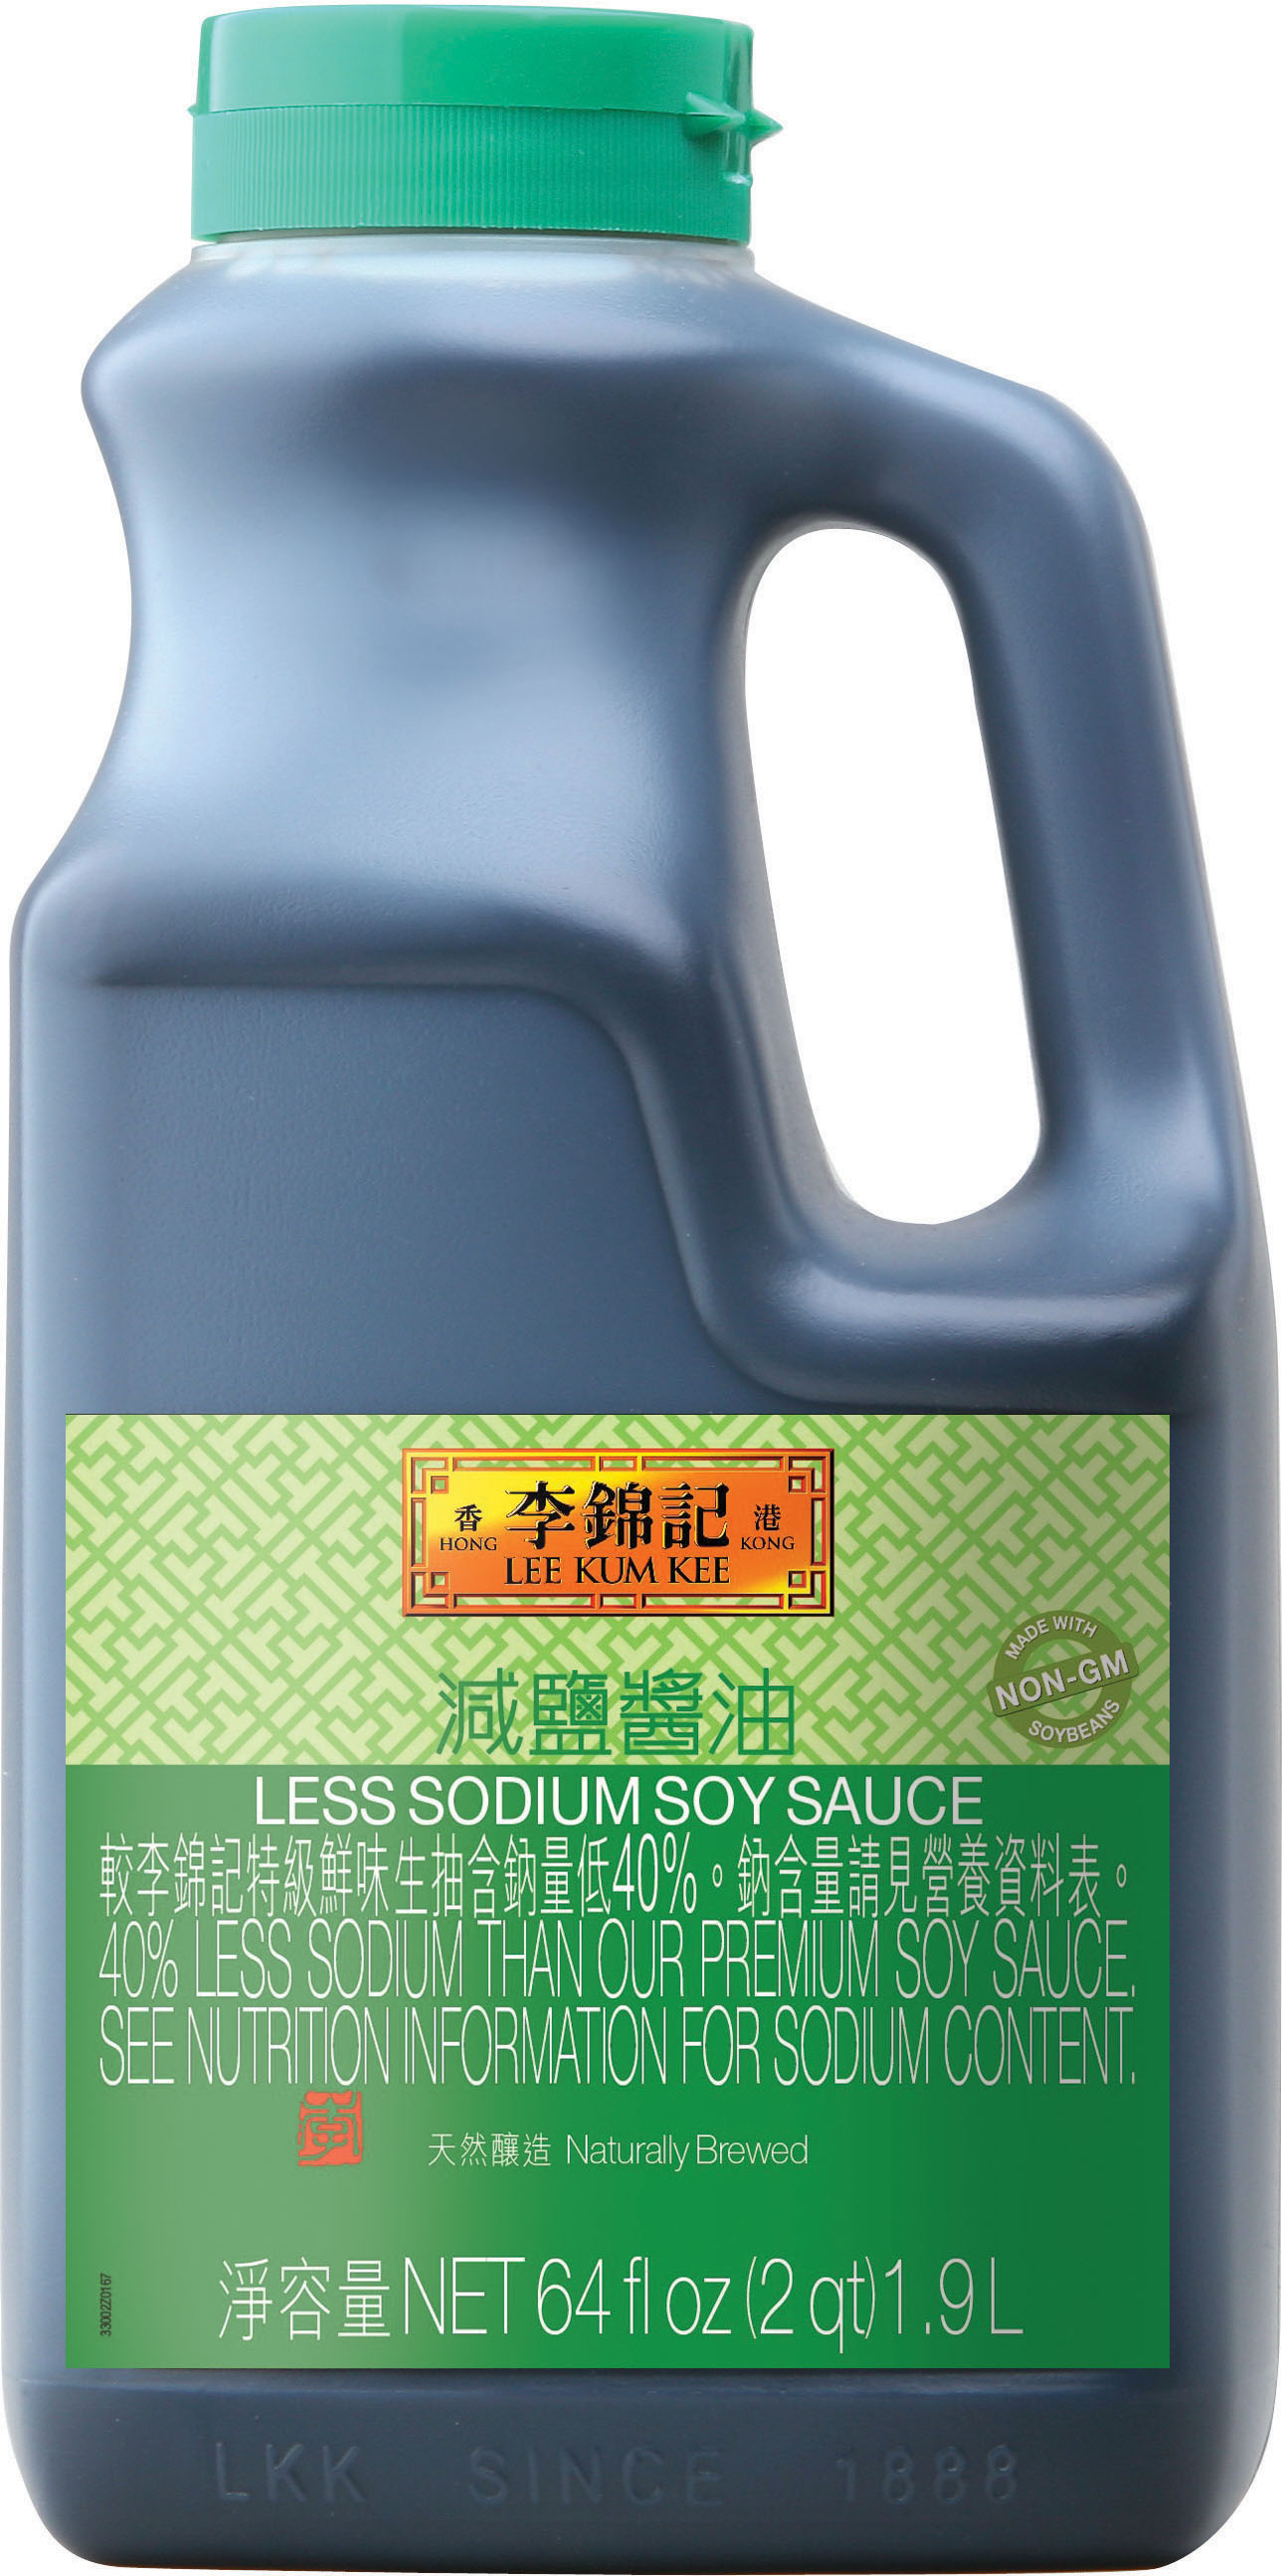 Less Sodium Soy Sauce 64 fl oz (2 qt) 1.9L, Pail